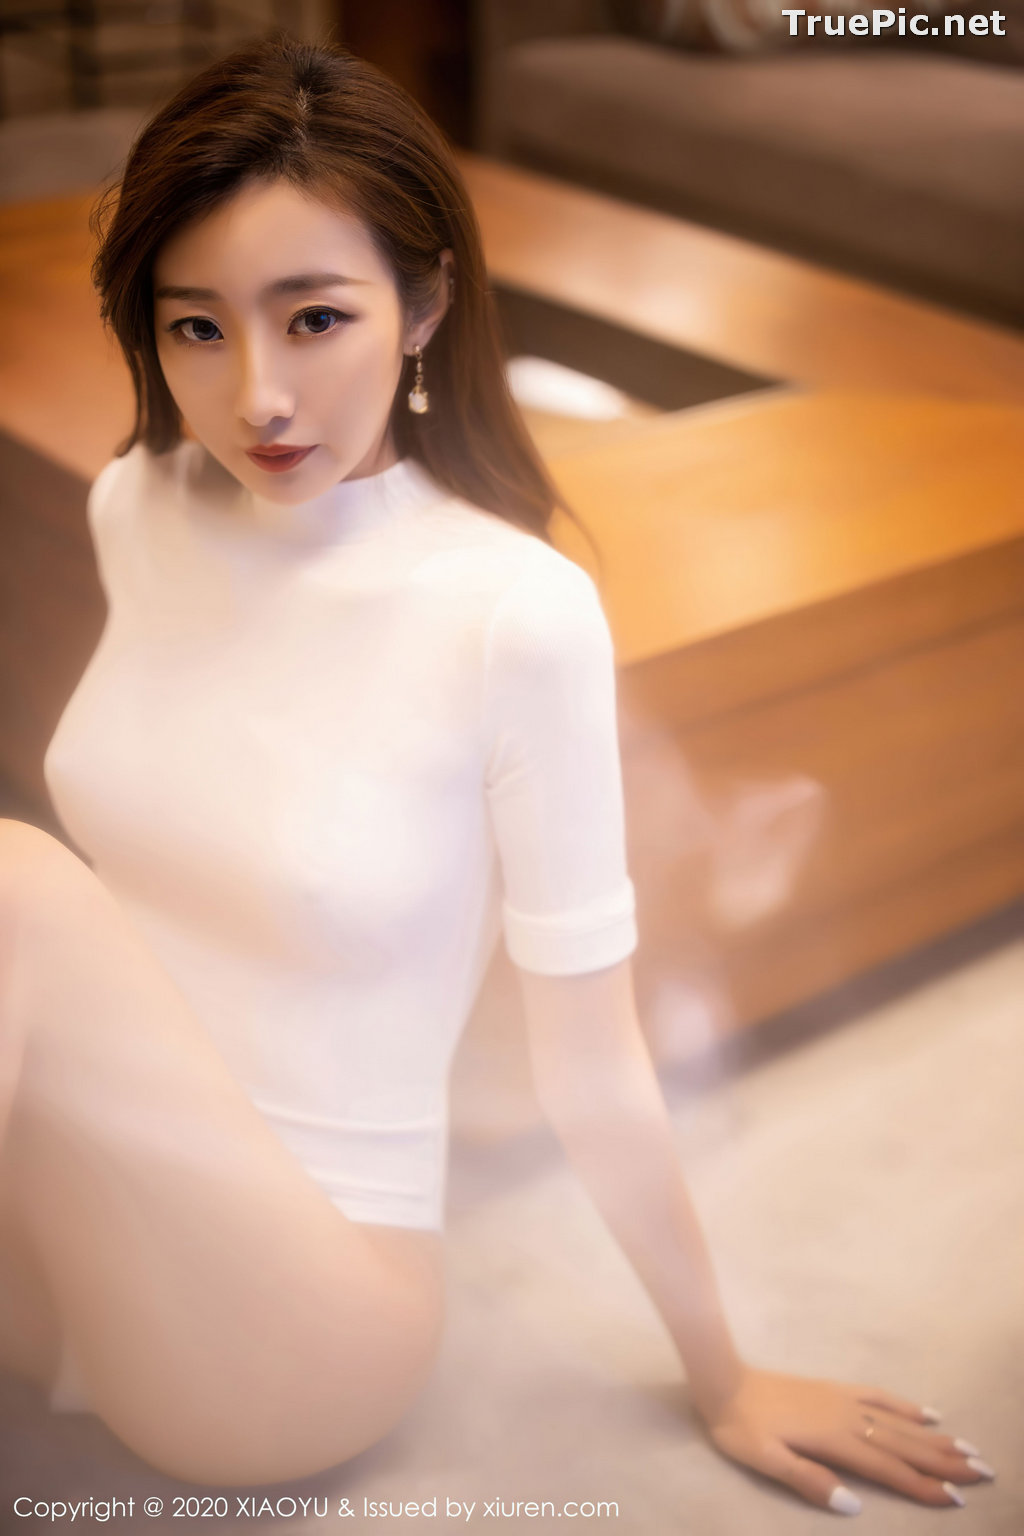 Image XiaoYu Vol.389 - Chinese Model - 安琪 Yee - Beautiful In White - TruePic.net - Picture-61